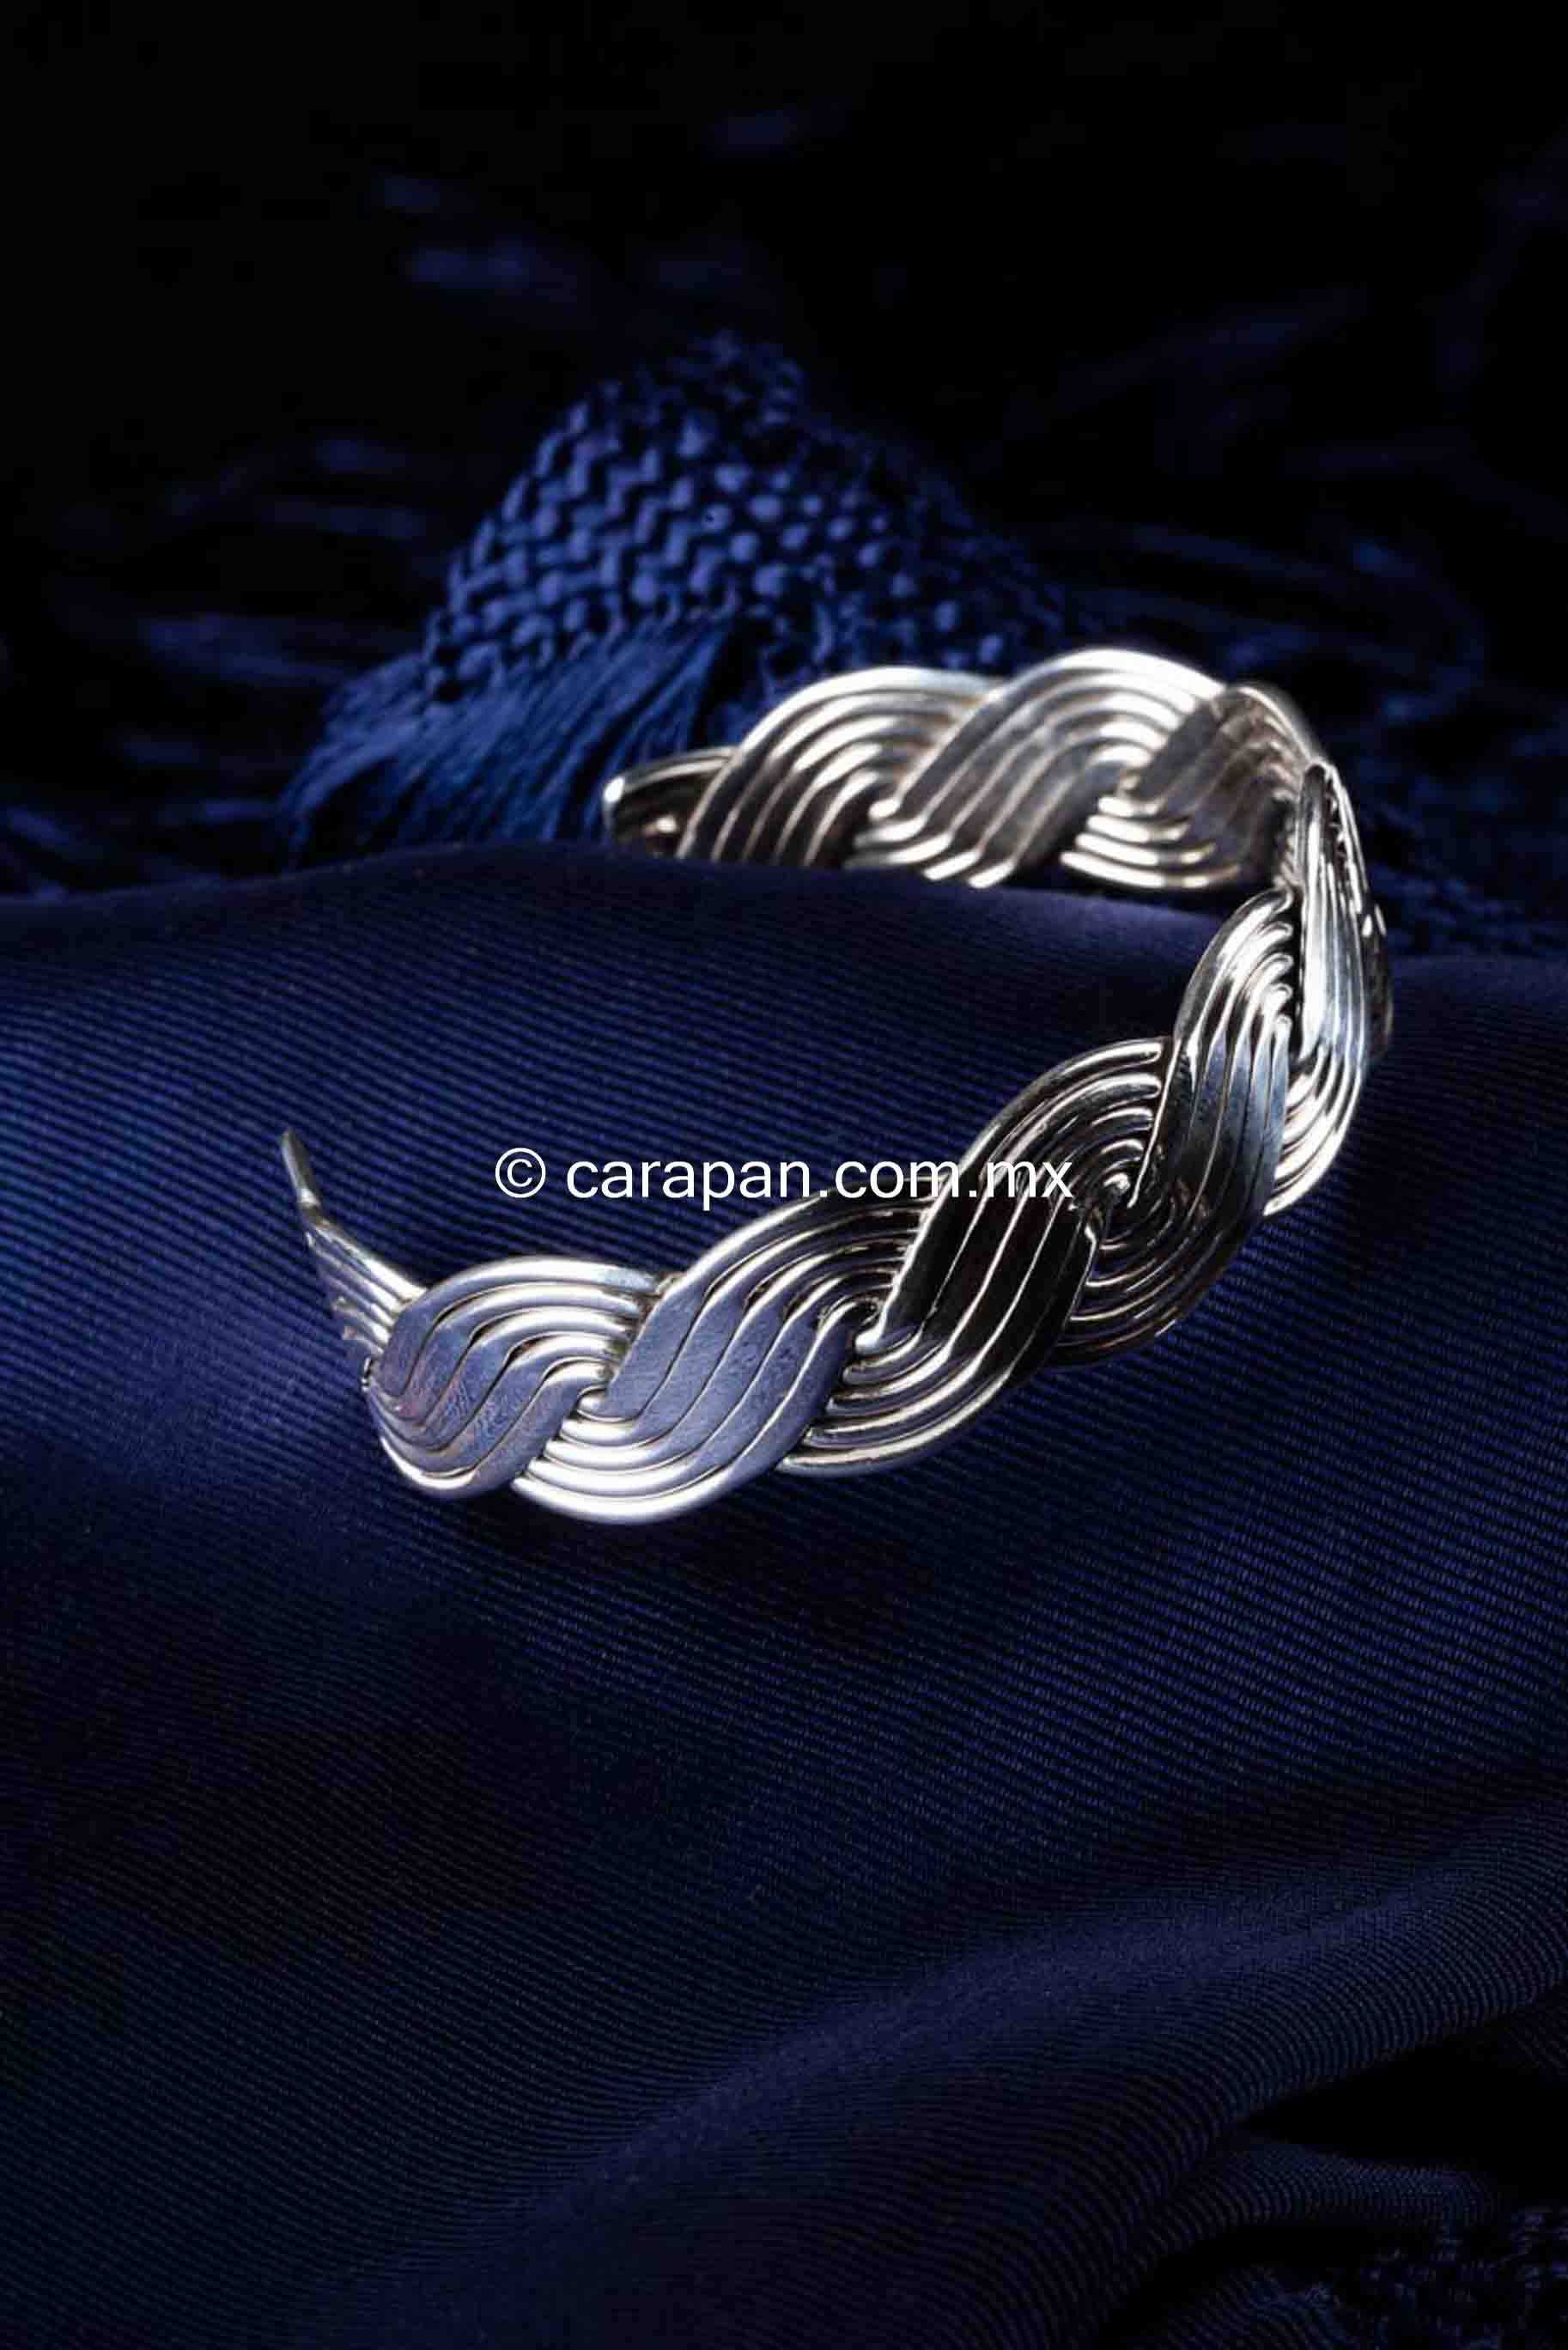 Buy 925 Sterling Silver Blue String Braided Bracelet For Men & Boys (Blue)  at Amazon.in